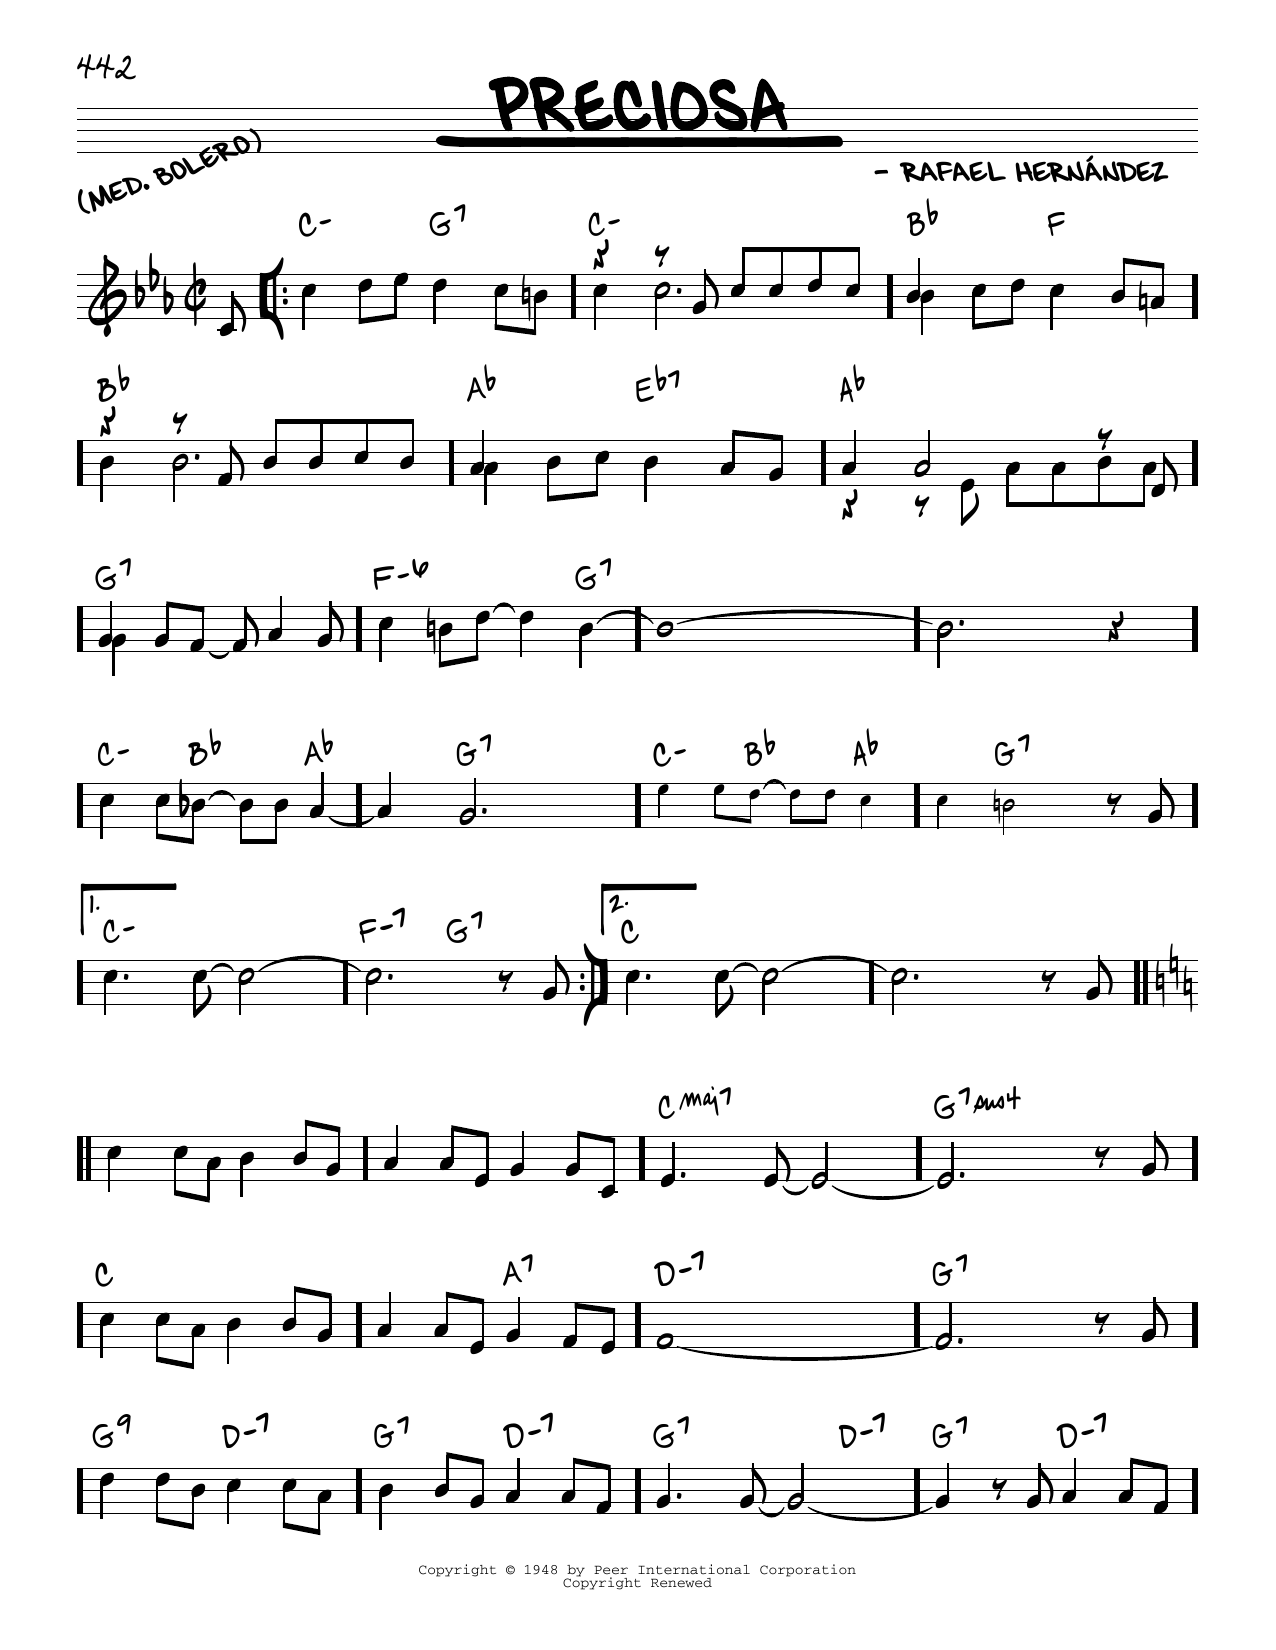 Rafael Hernandez Preciosa Sheet Music Notes & Chords for Real Book – Melody & Chords - Download or Print PDF